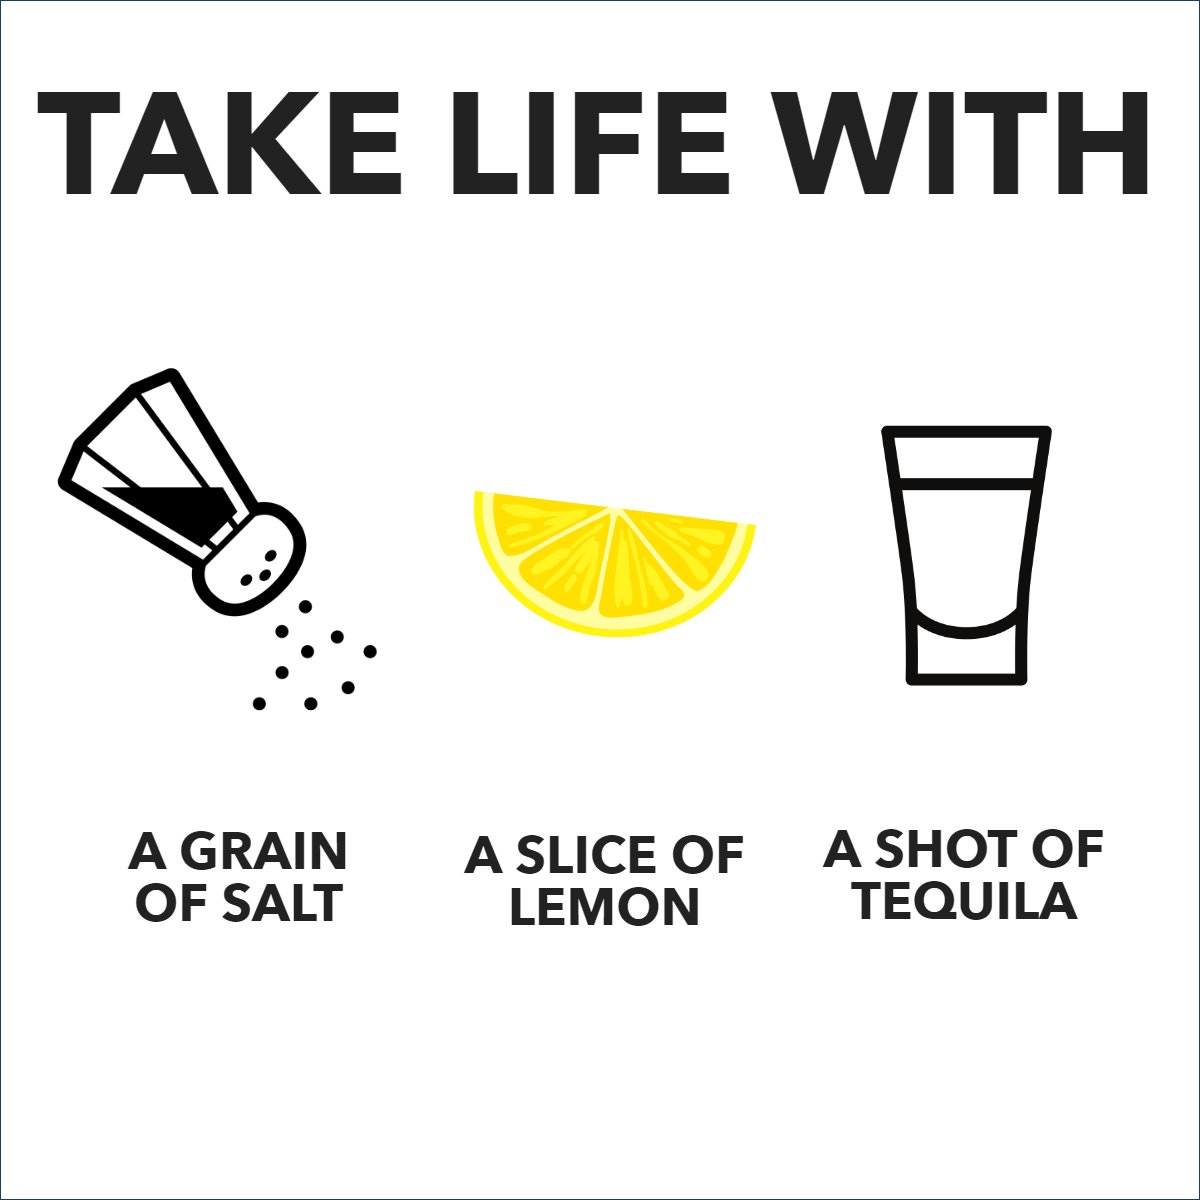 Take life with a grain of salt, a slice of lemon and a shot of tequila... 🧂🍋🥃

#lifeisbetteratthebeach   #tequilashots   #makelifebetter   #lemonslice   #tequilashot   #positive   #positivethinking
#naples #naplesfl #naplesflorida #marcoisland #marcoislandfl